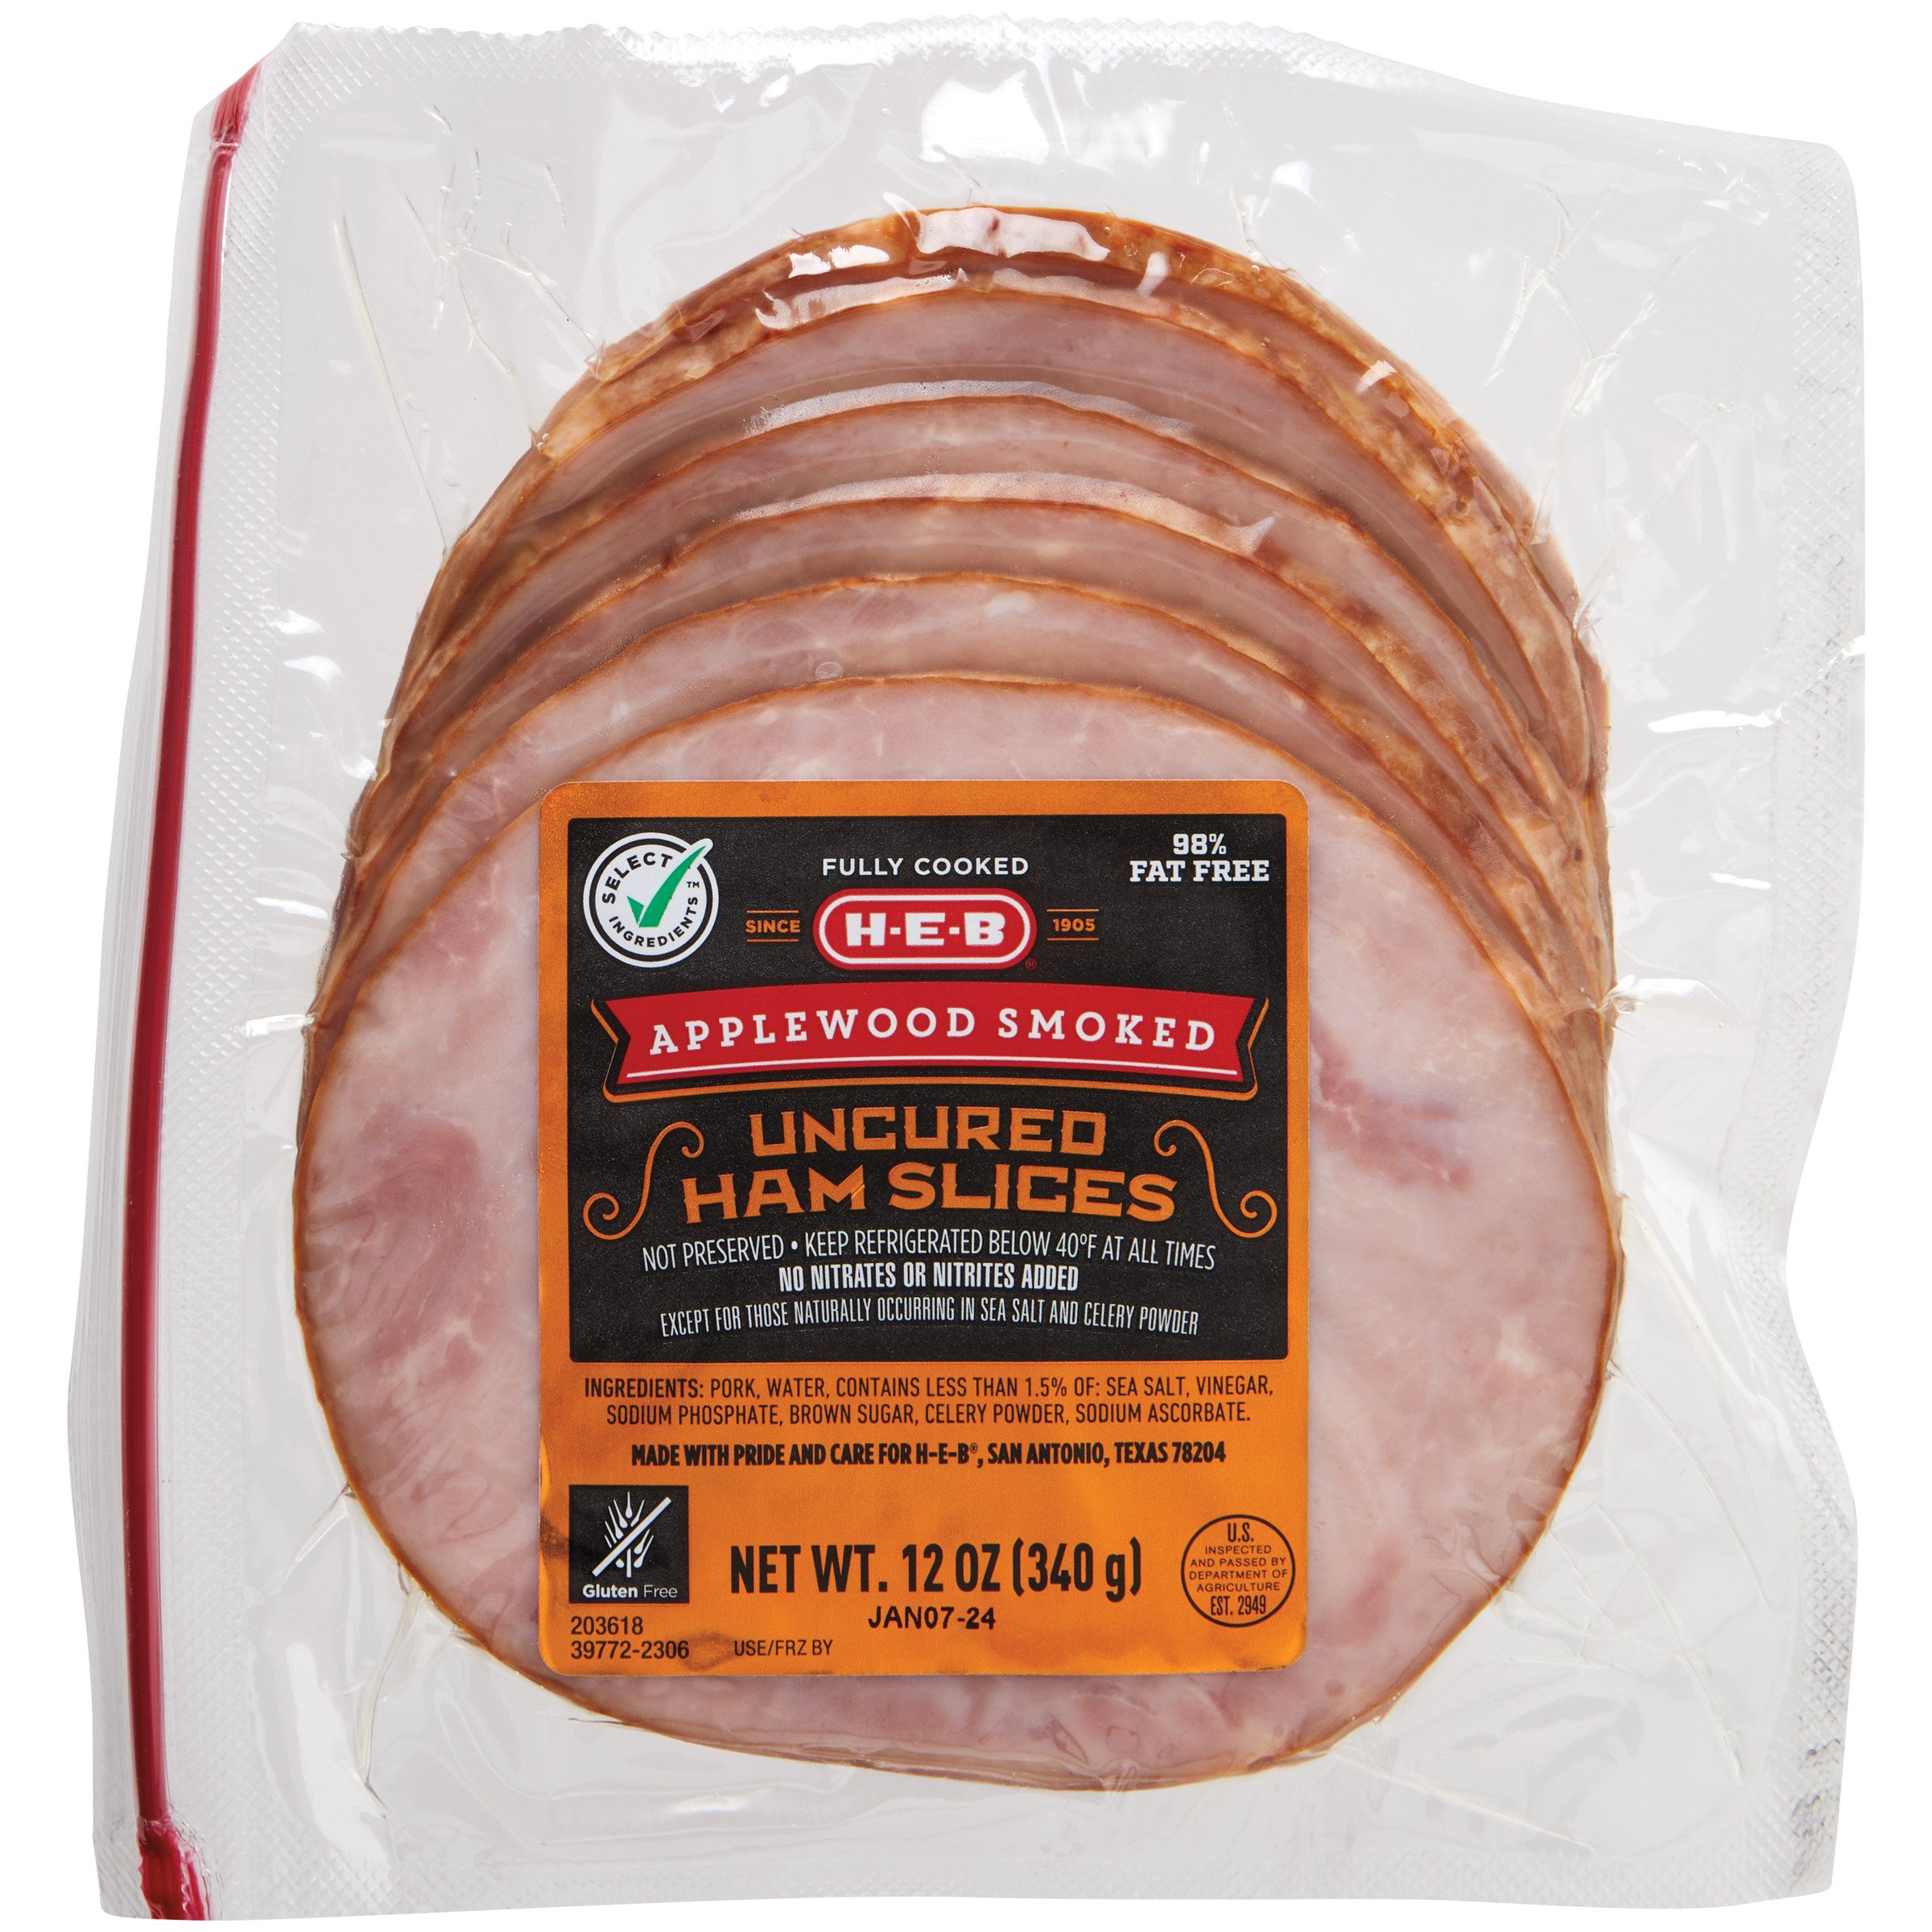 H-E-B Applewood Smoked Uncured Ham Slices - Shop Pork at H-E-B